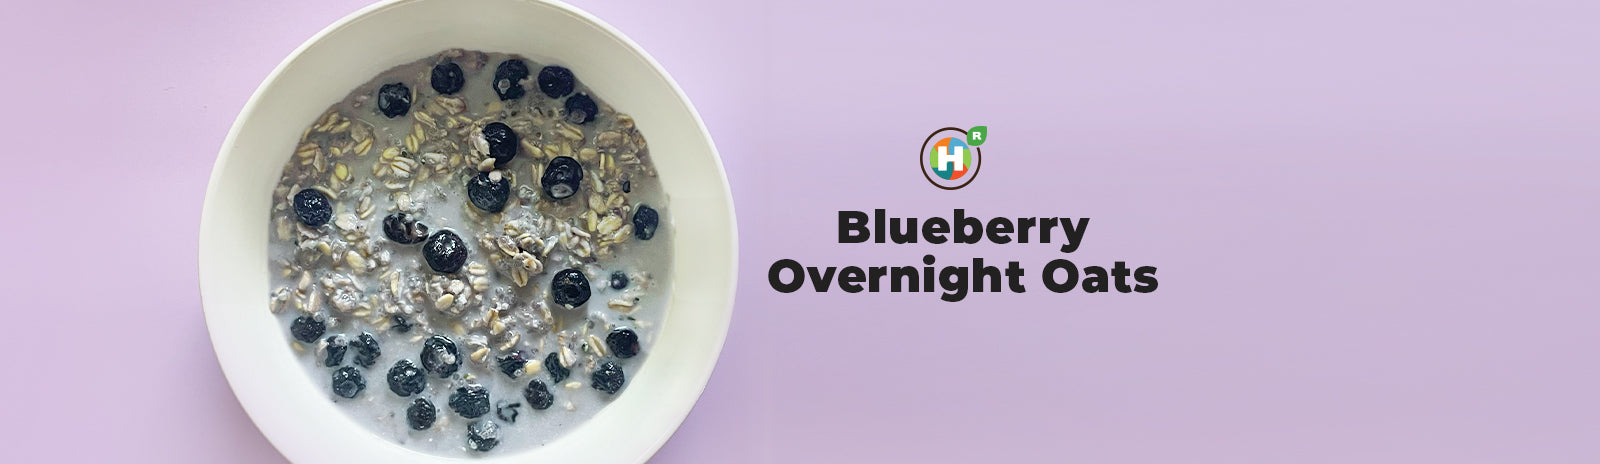 Blueberry Overnight Oats